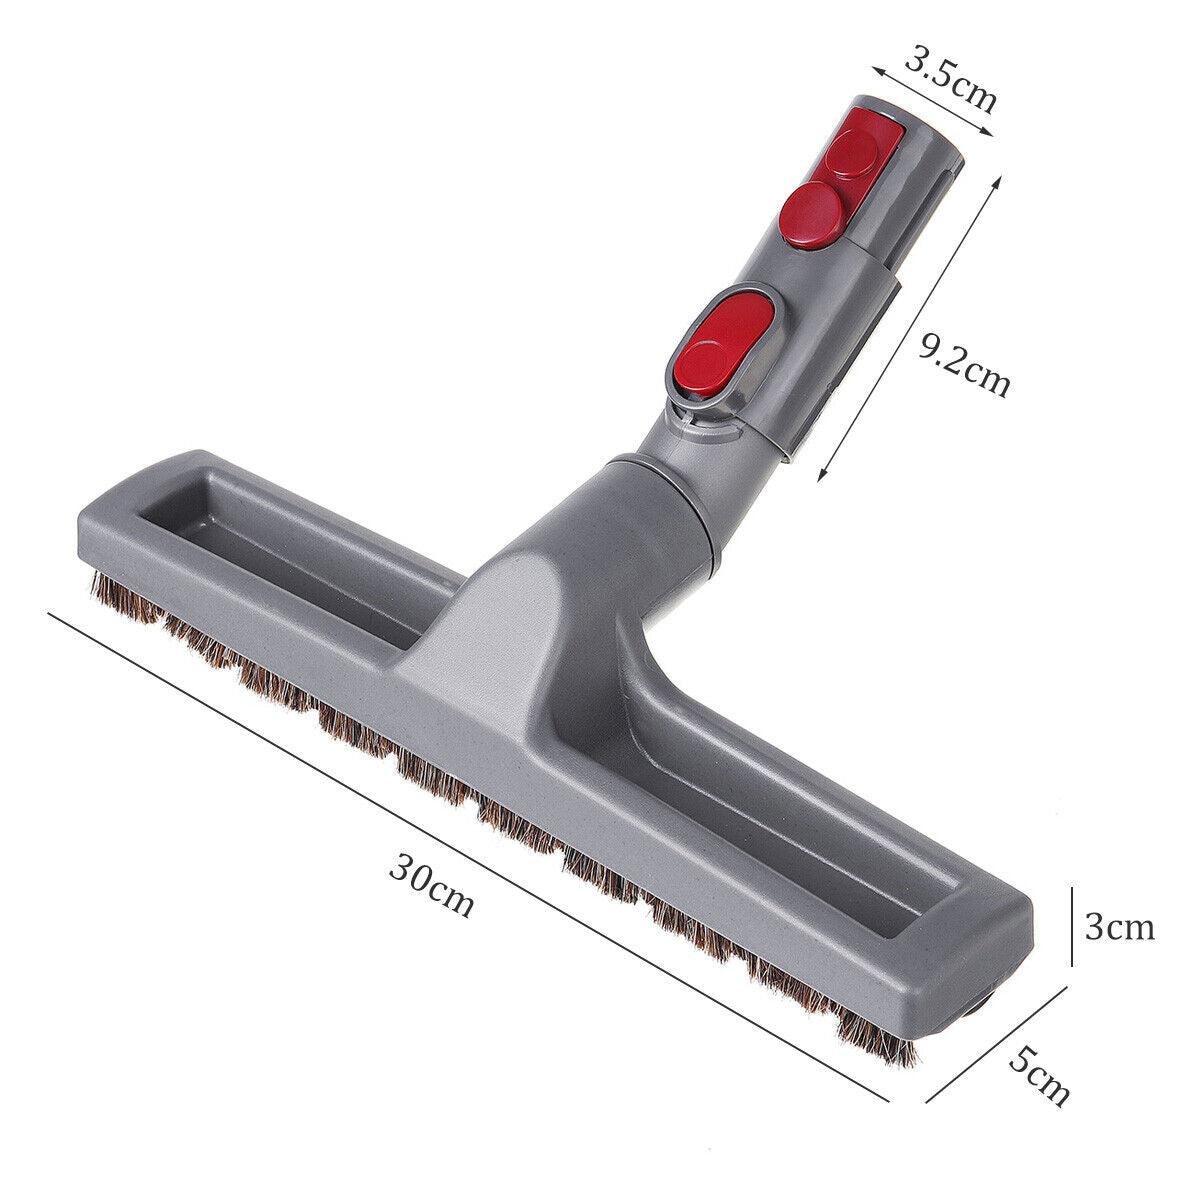 Dyson Compatible Hard Floor Brush Attachment For V6 V7 V8 V10 V11 Vacuum - Office Catch